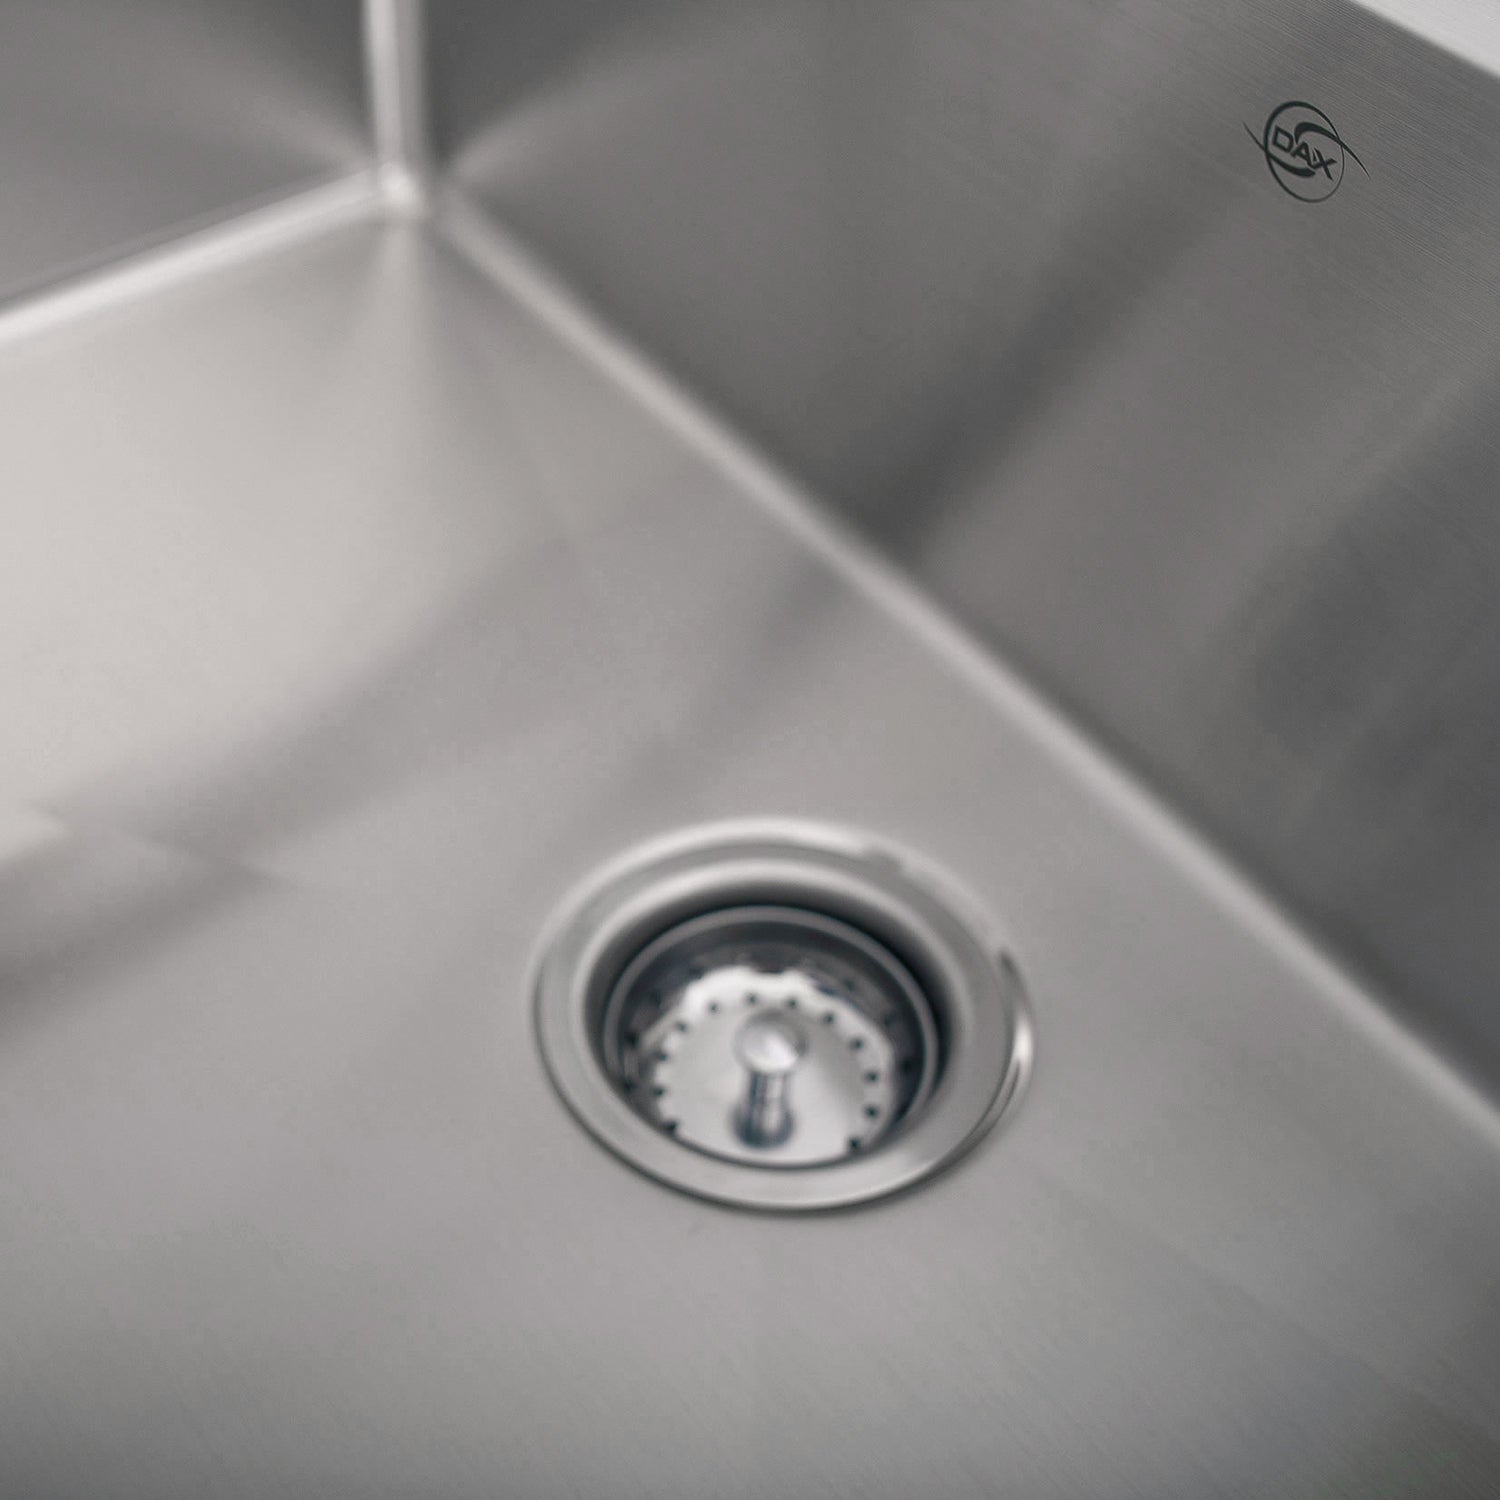 DAX Single Bowl Undermount Kitchen Sink, 18 Gauge Stainless Steel, Brushed Finish , 30 x 18 x 9 Inches (DAX-3018B)